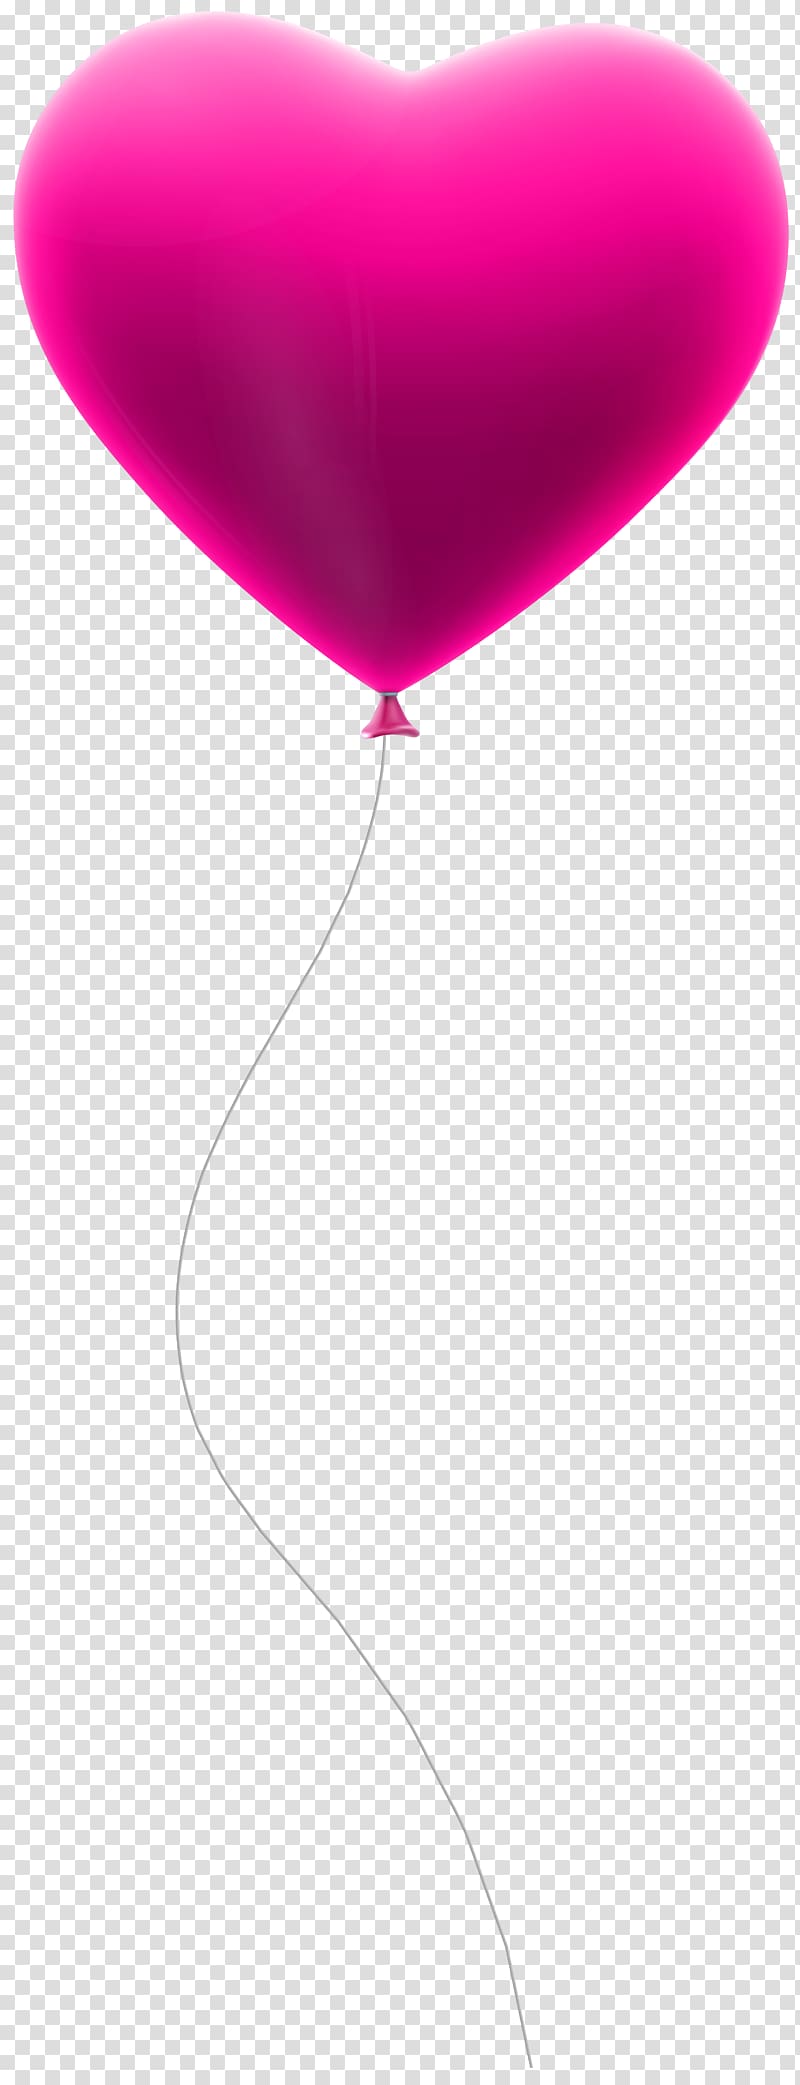 pink heart balloon illustration, Heart Red Balloon, Pink Heart Balloon transparent background PNG clipart